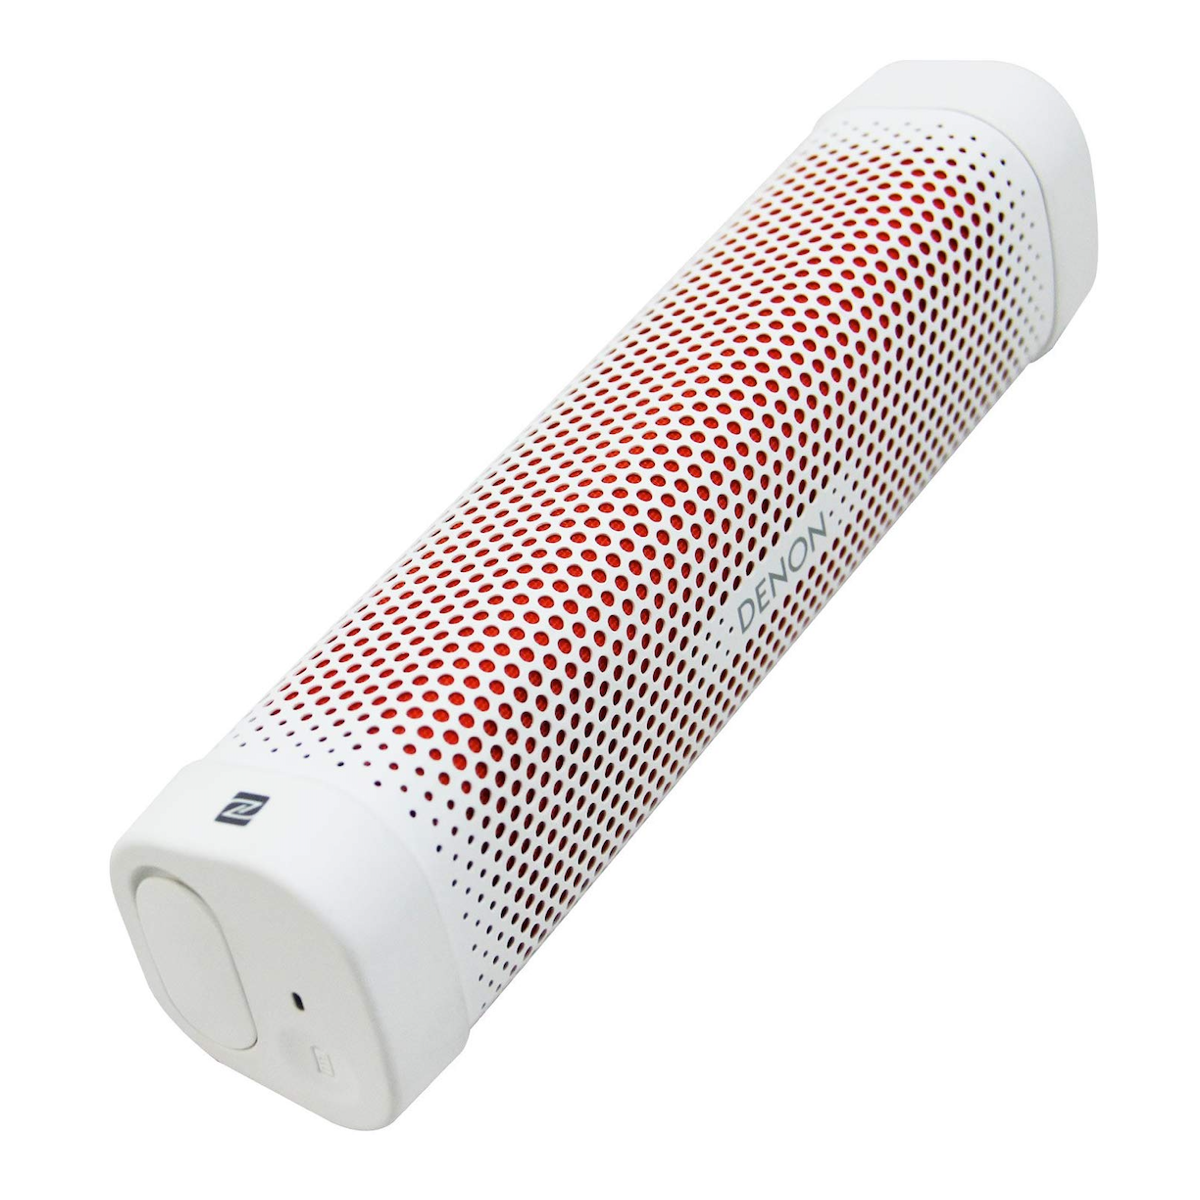 Denon Envaya Mini - DSB-100 - Portable Bluetooth Speaker - AVStore